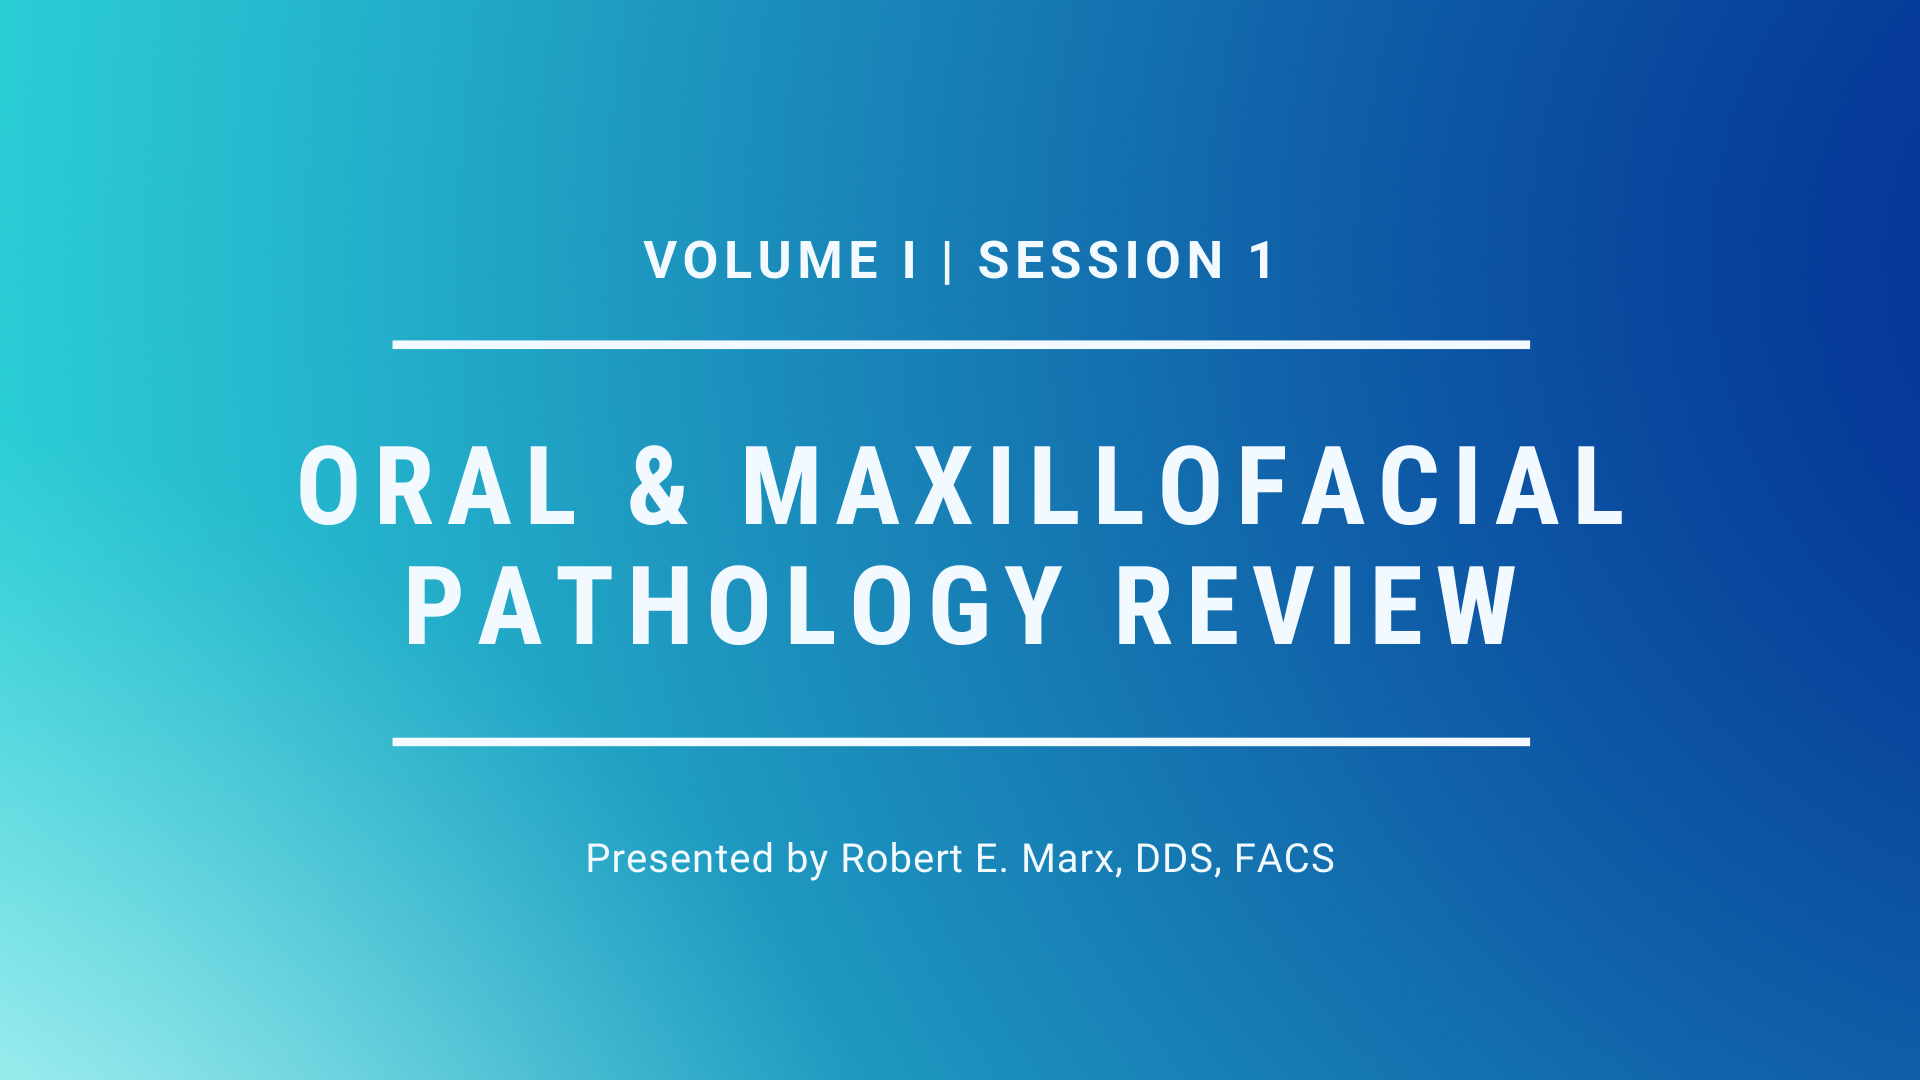 Oral & Maxillofacial Pathology Review – Volume I (OMFS) - Session 1